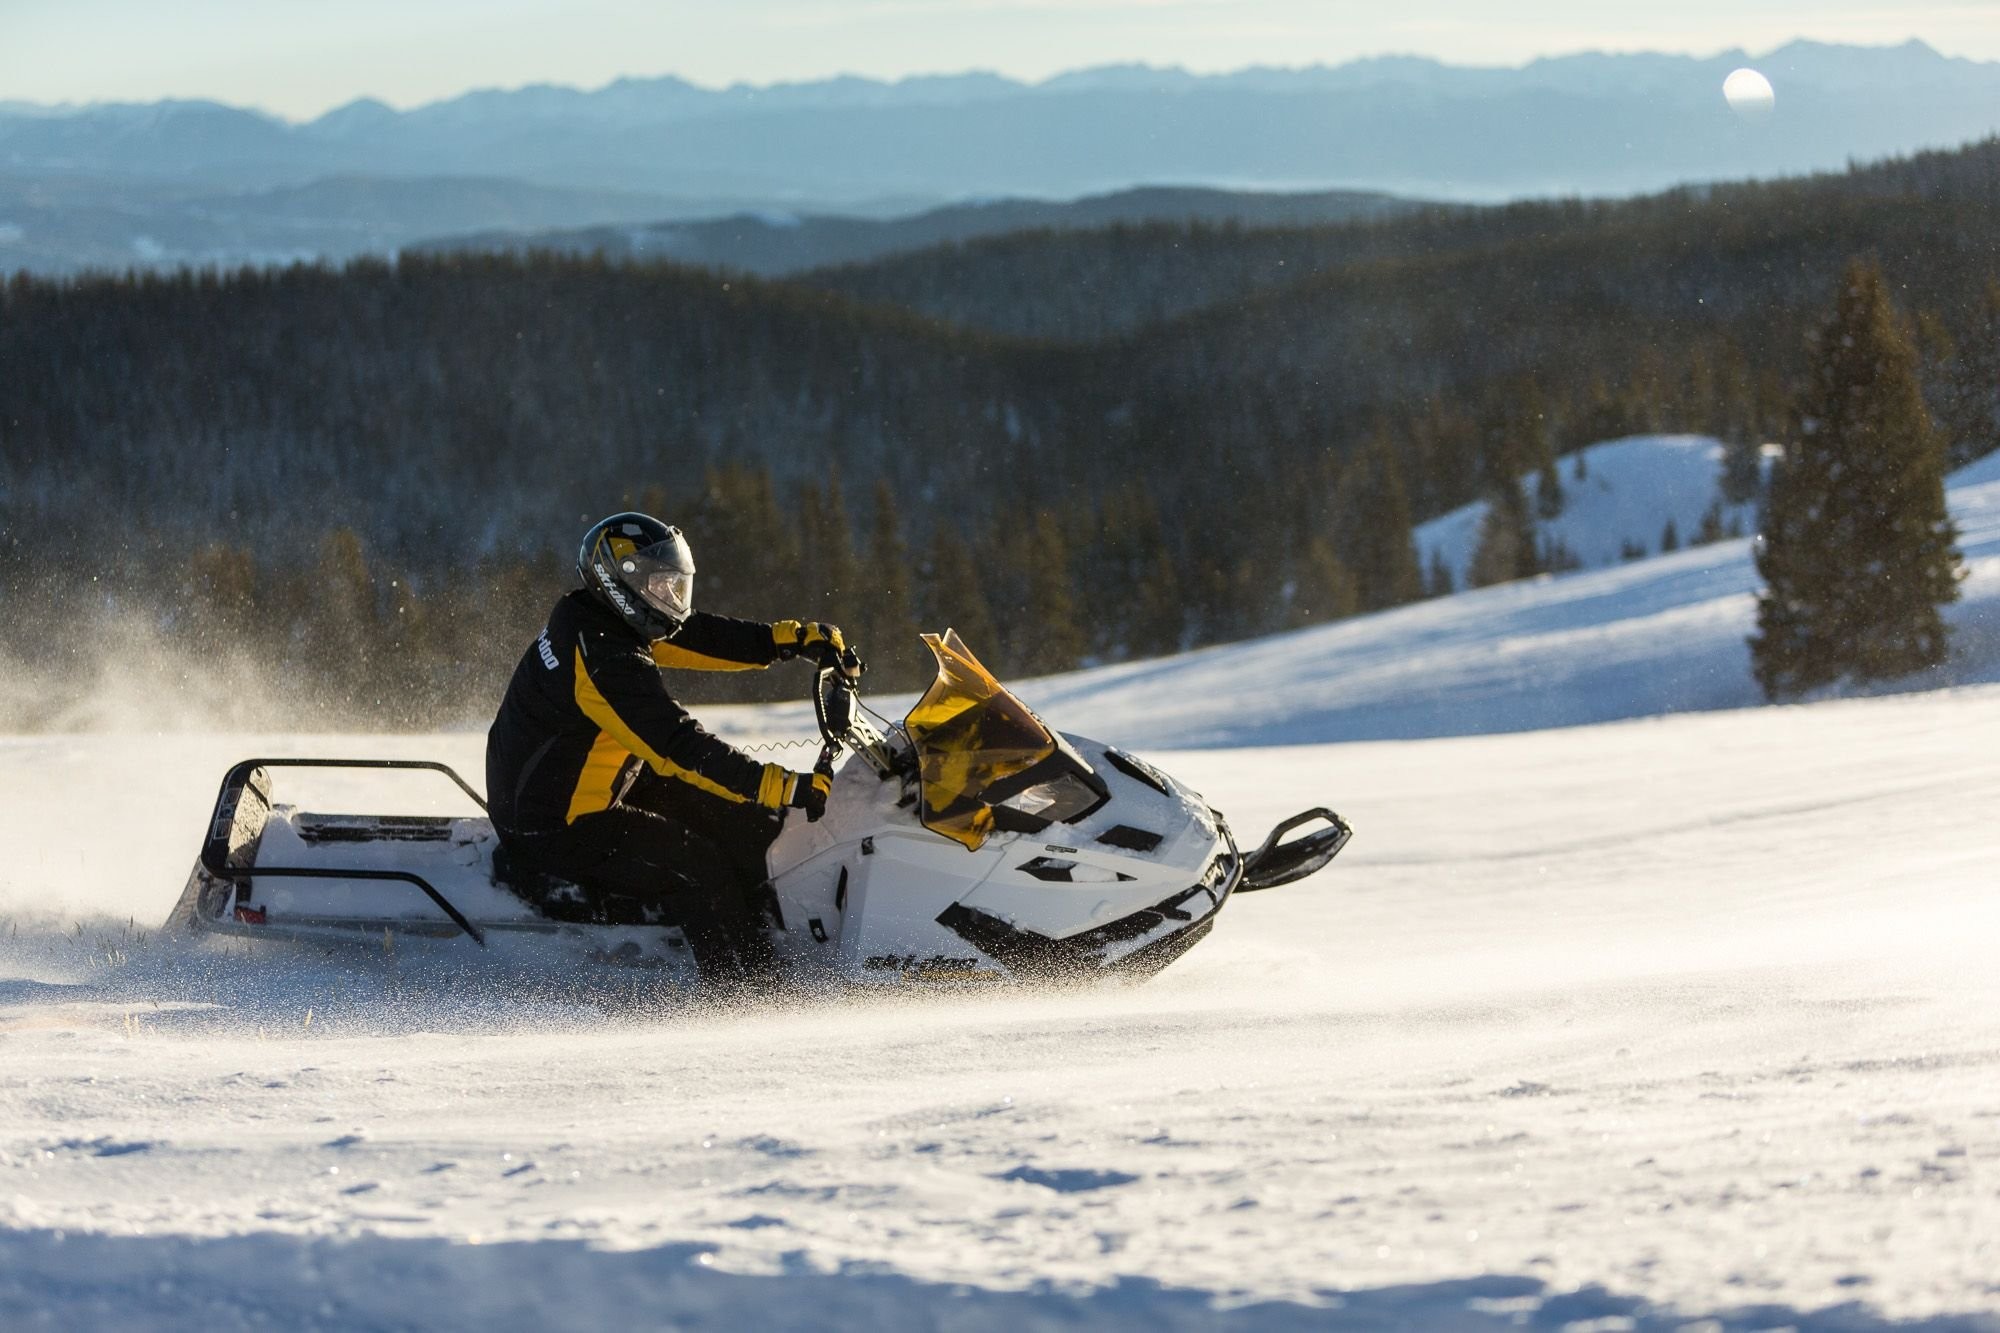 Ski Doo Snowmobile Sled Ski Doo Winter Snow Extreme - 2015 Ski Doo Tundra Lt 550f - HD Wallpaper 